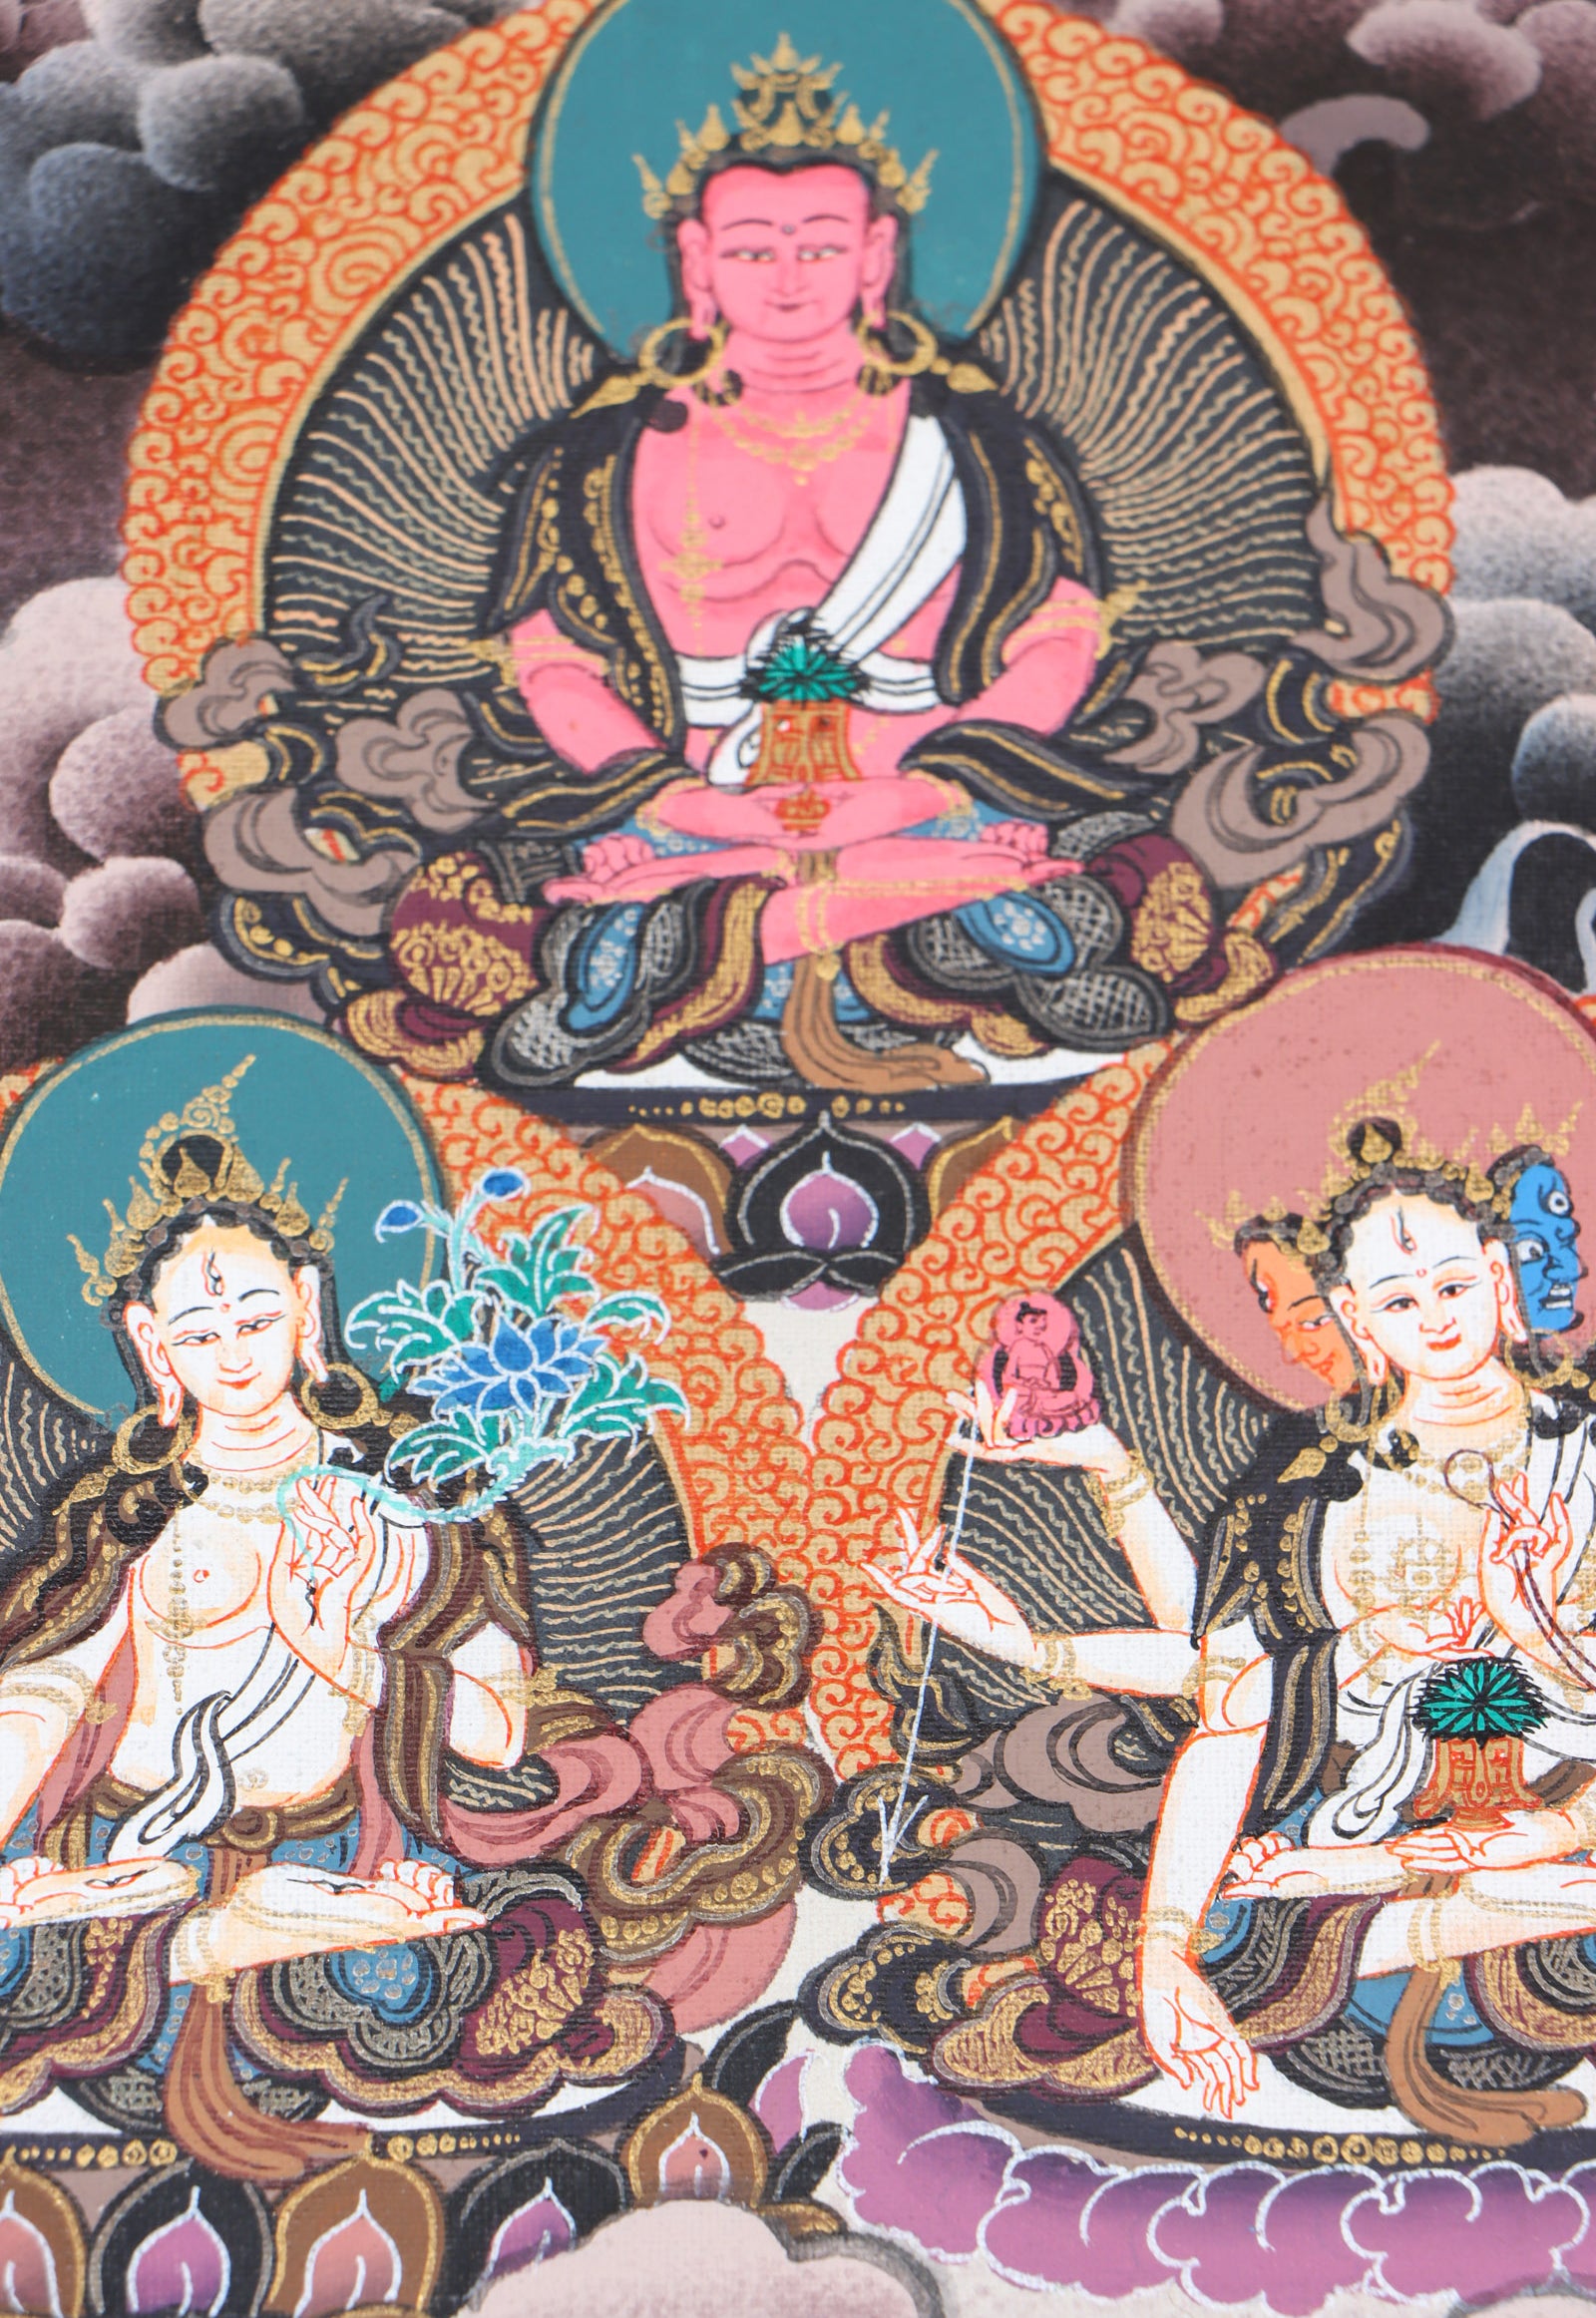 Shakyamuni Buddha Mandala Thangka - high quality thangka